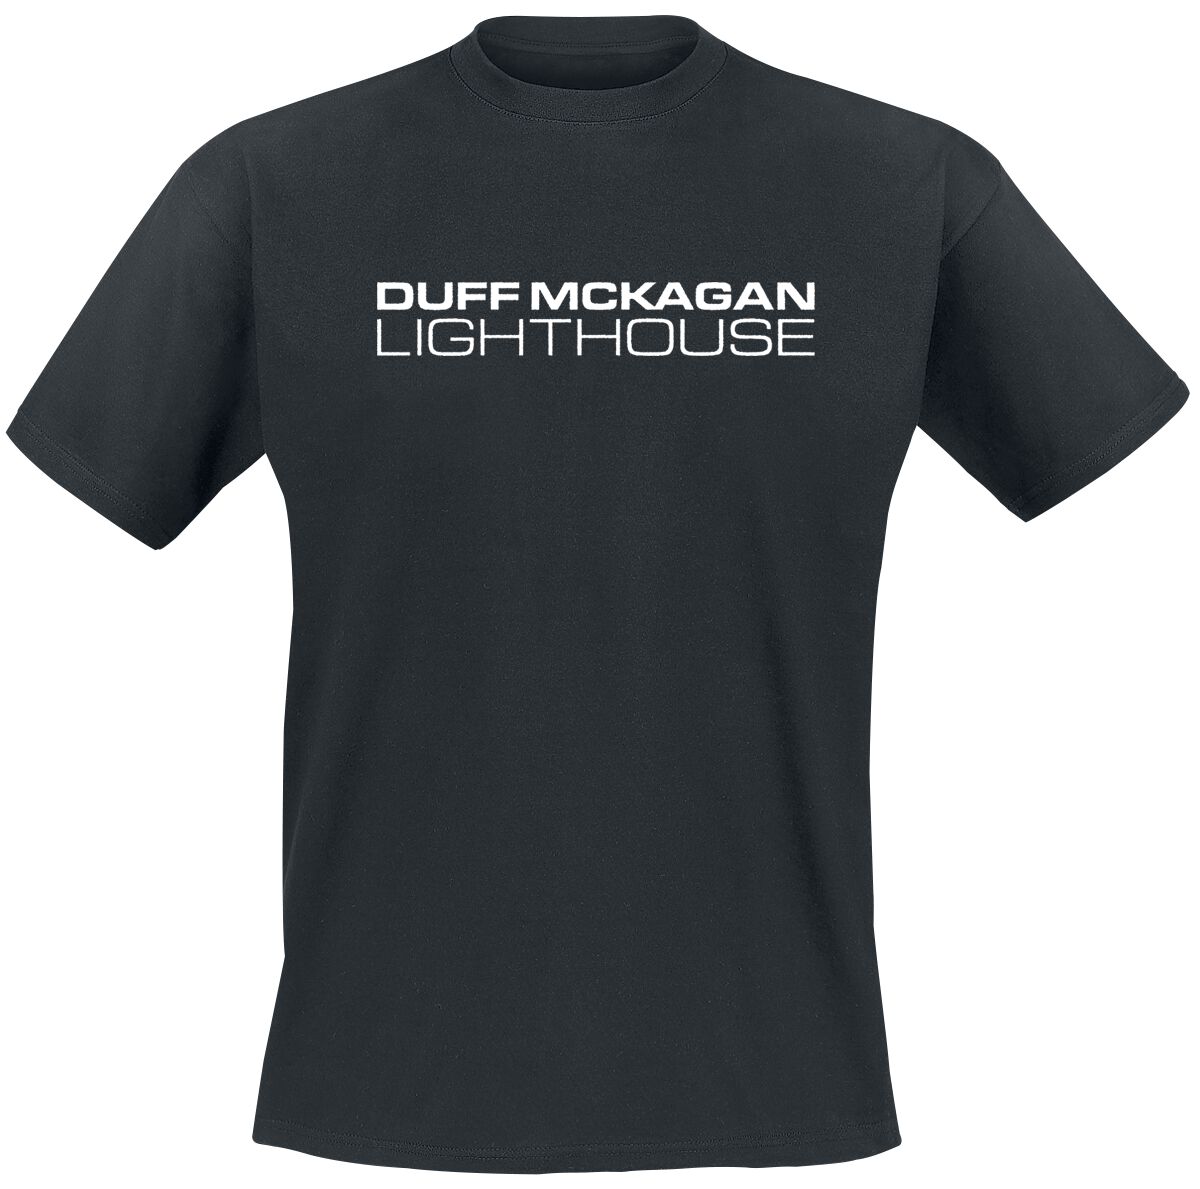 Image of T-Shirt di McKagan, Duff - Lighthouse - S a XXL - Uomo - nero